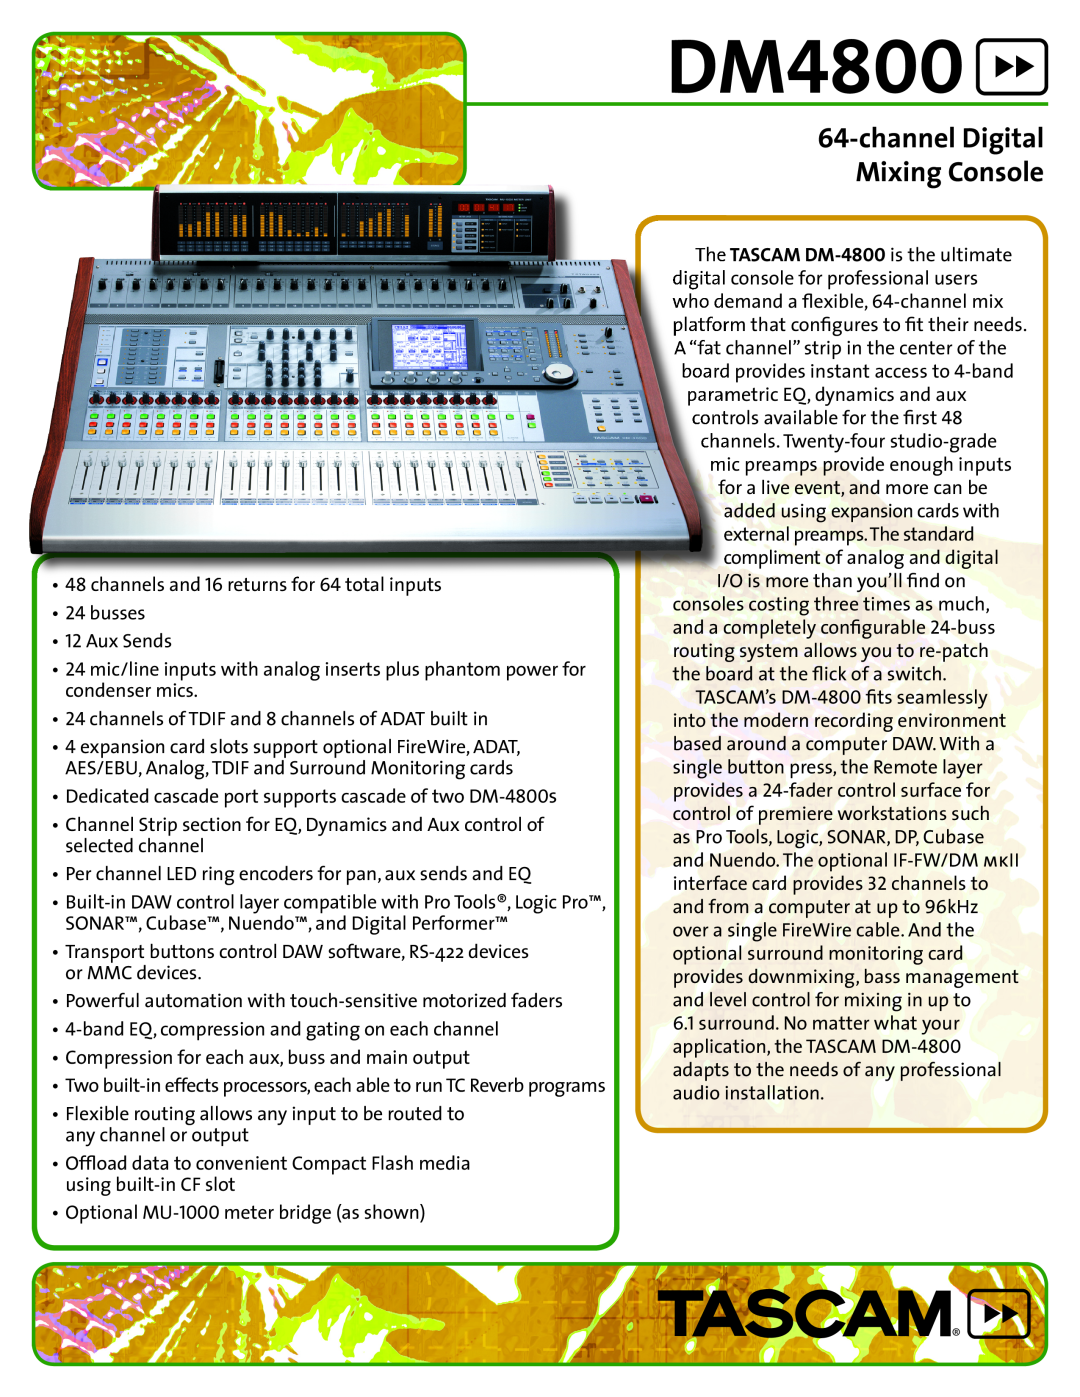 Tascam DM-4800 manual DM4800, channel Digital Mixing Console 